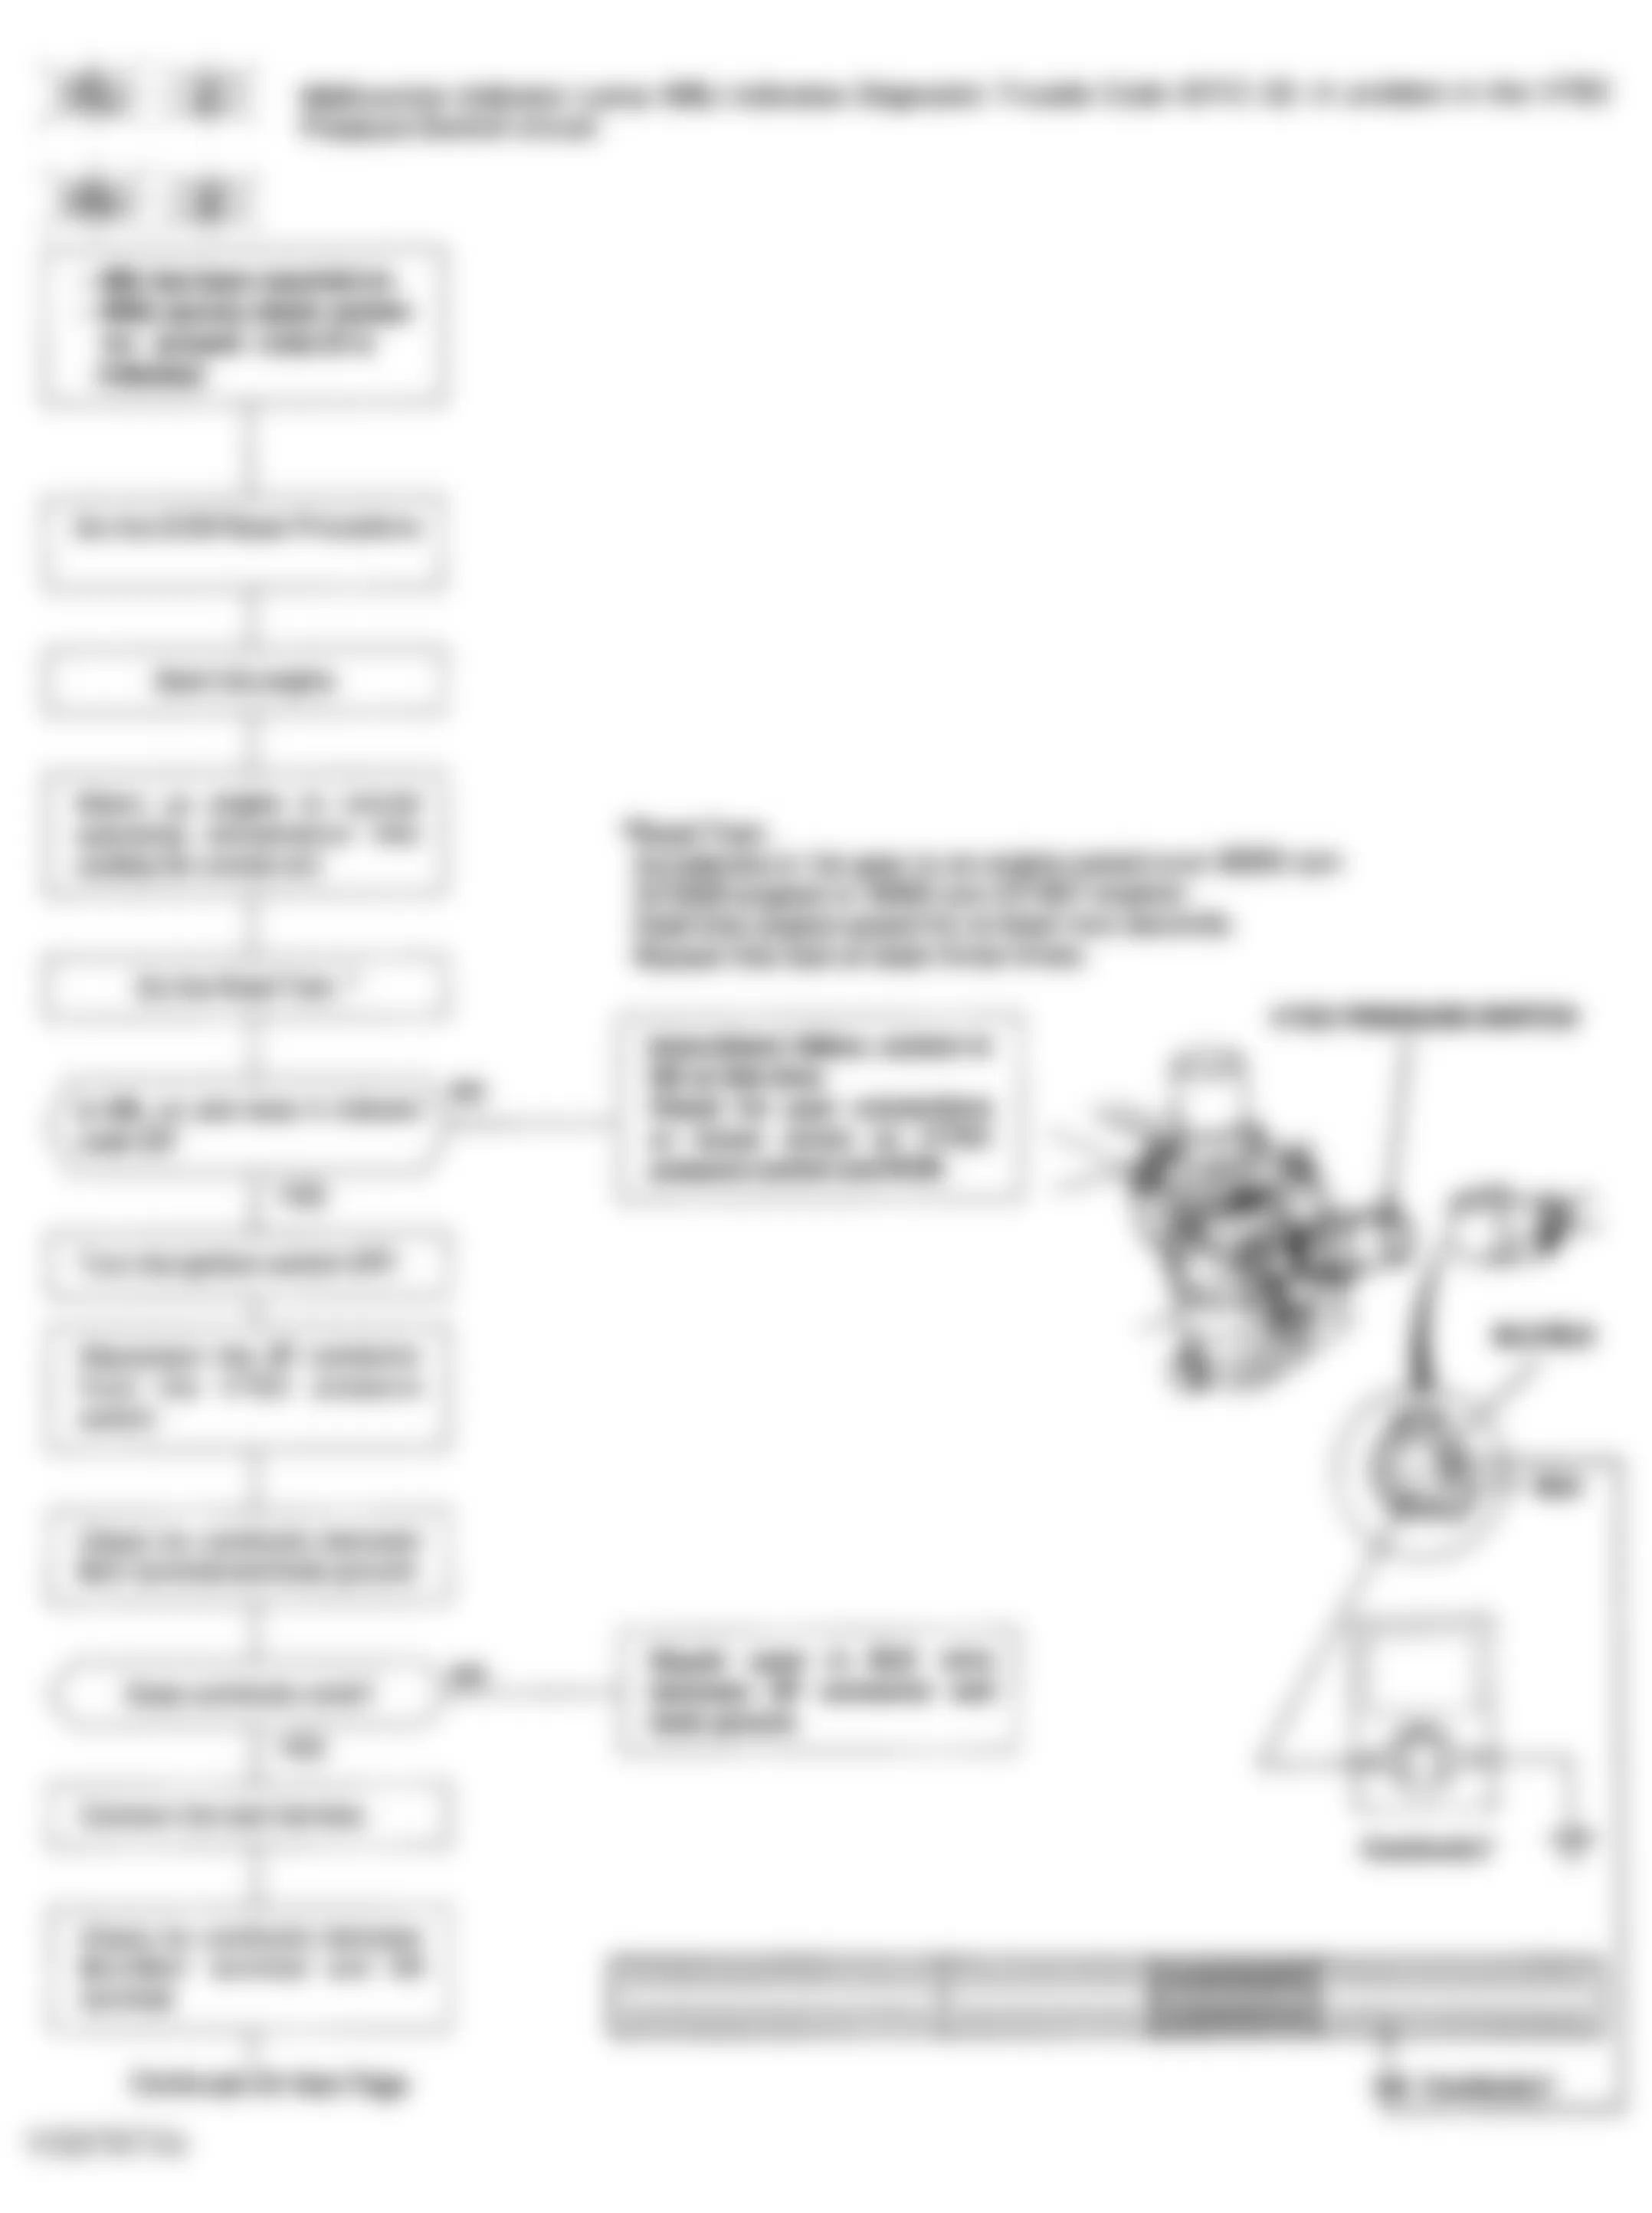 Honda Civic CX 1993 - Component Locations -  Code 22 Flowchart, VTEC Pressure Switch (1 of 3)